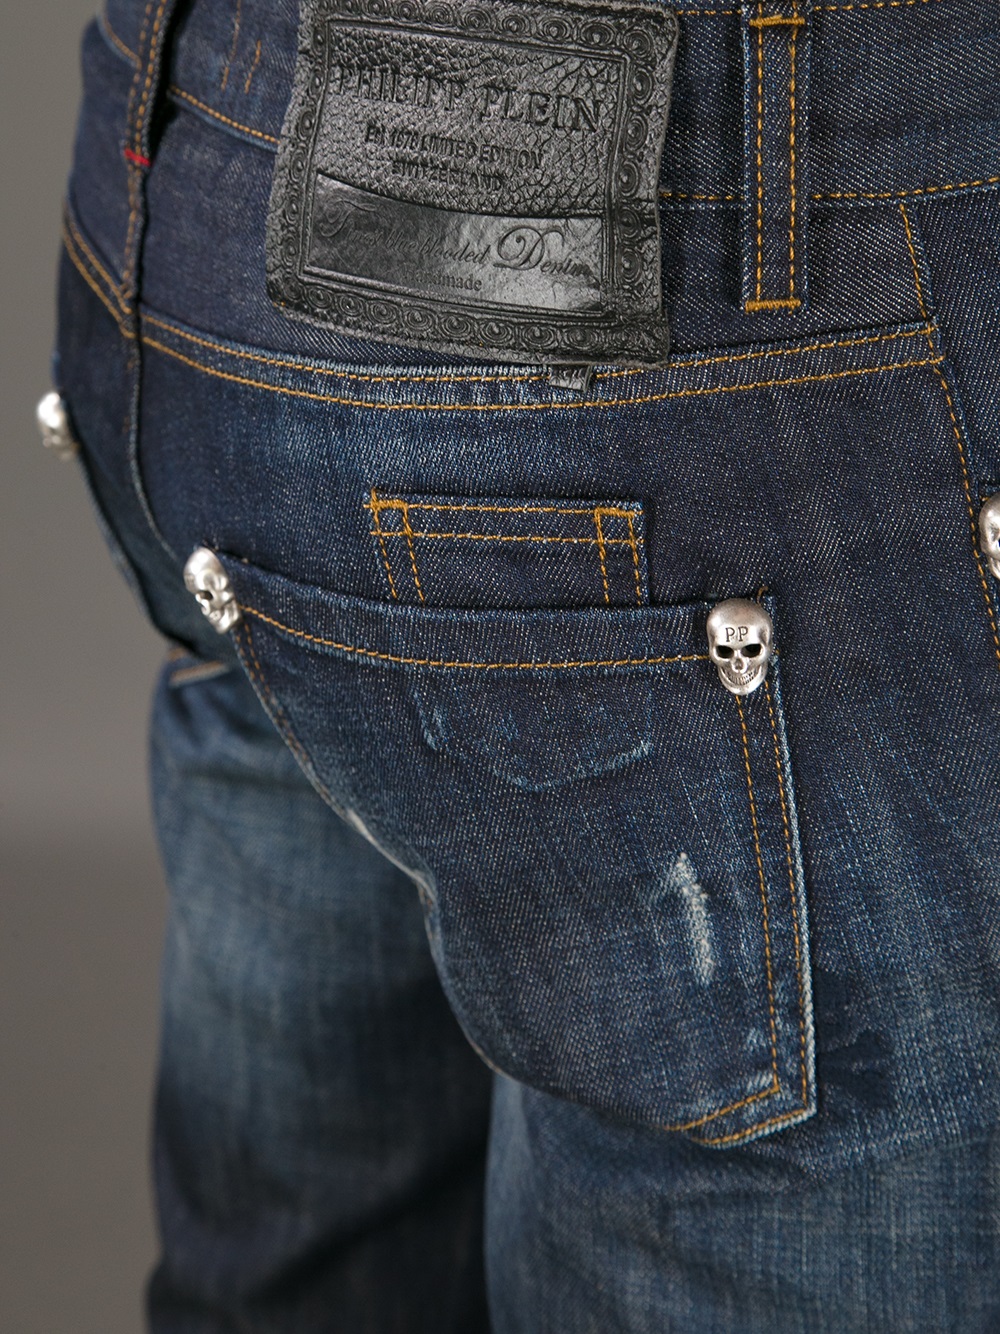 Lyst - Philipp Plein Distressed Skull Detail Jean in Blue for Men